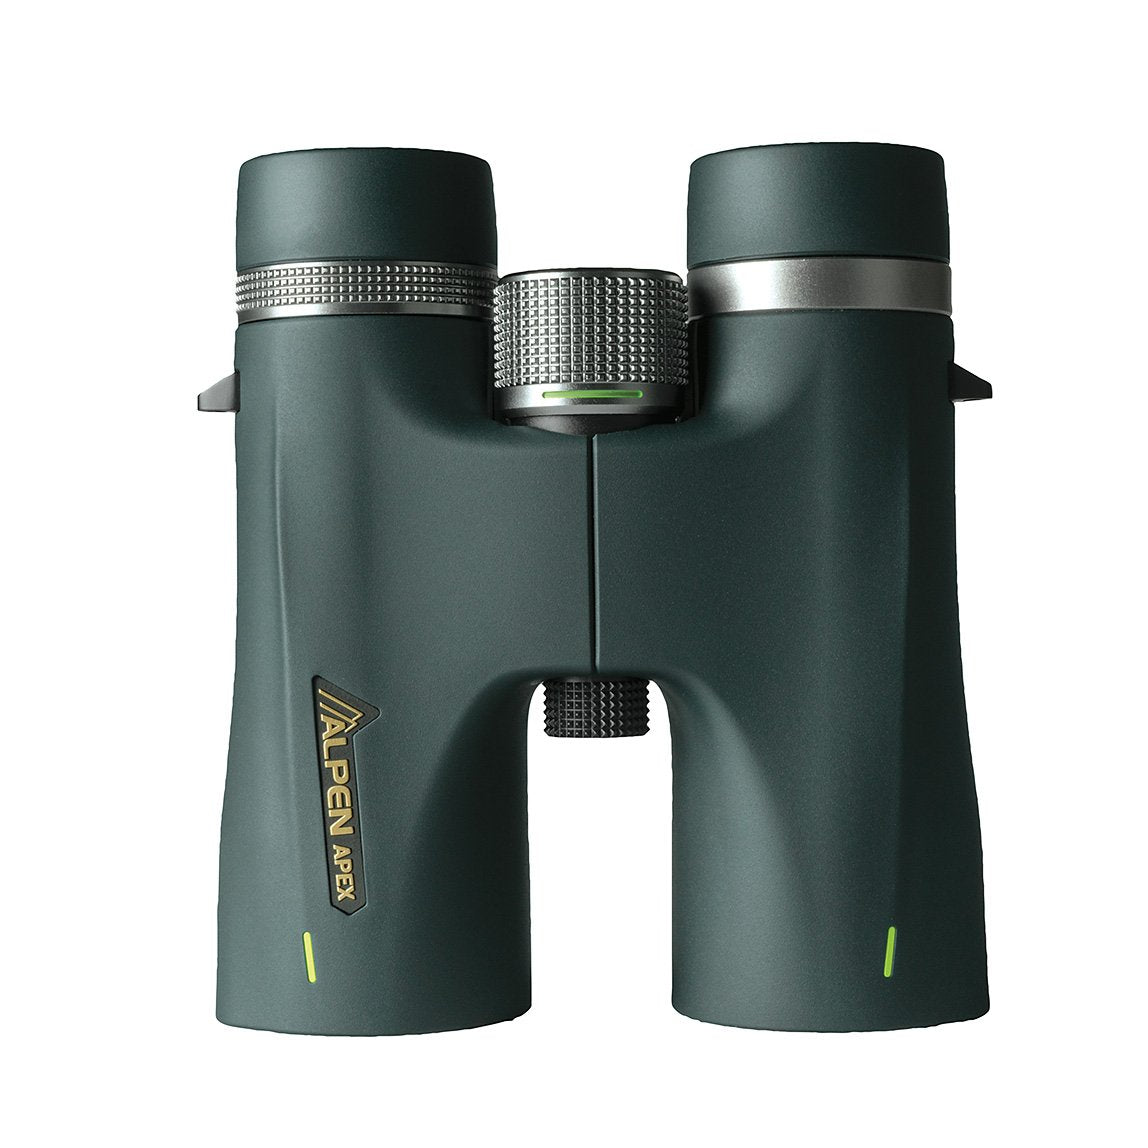 Alpen Apex 8x42 Binoculars - CoreScientifics